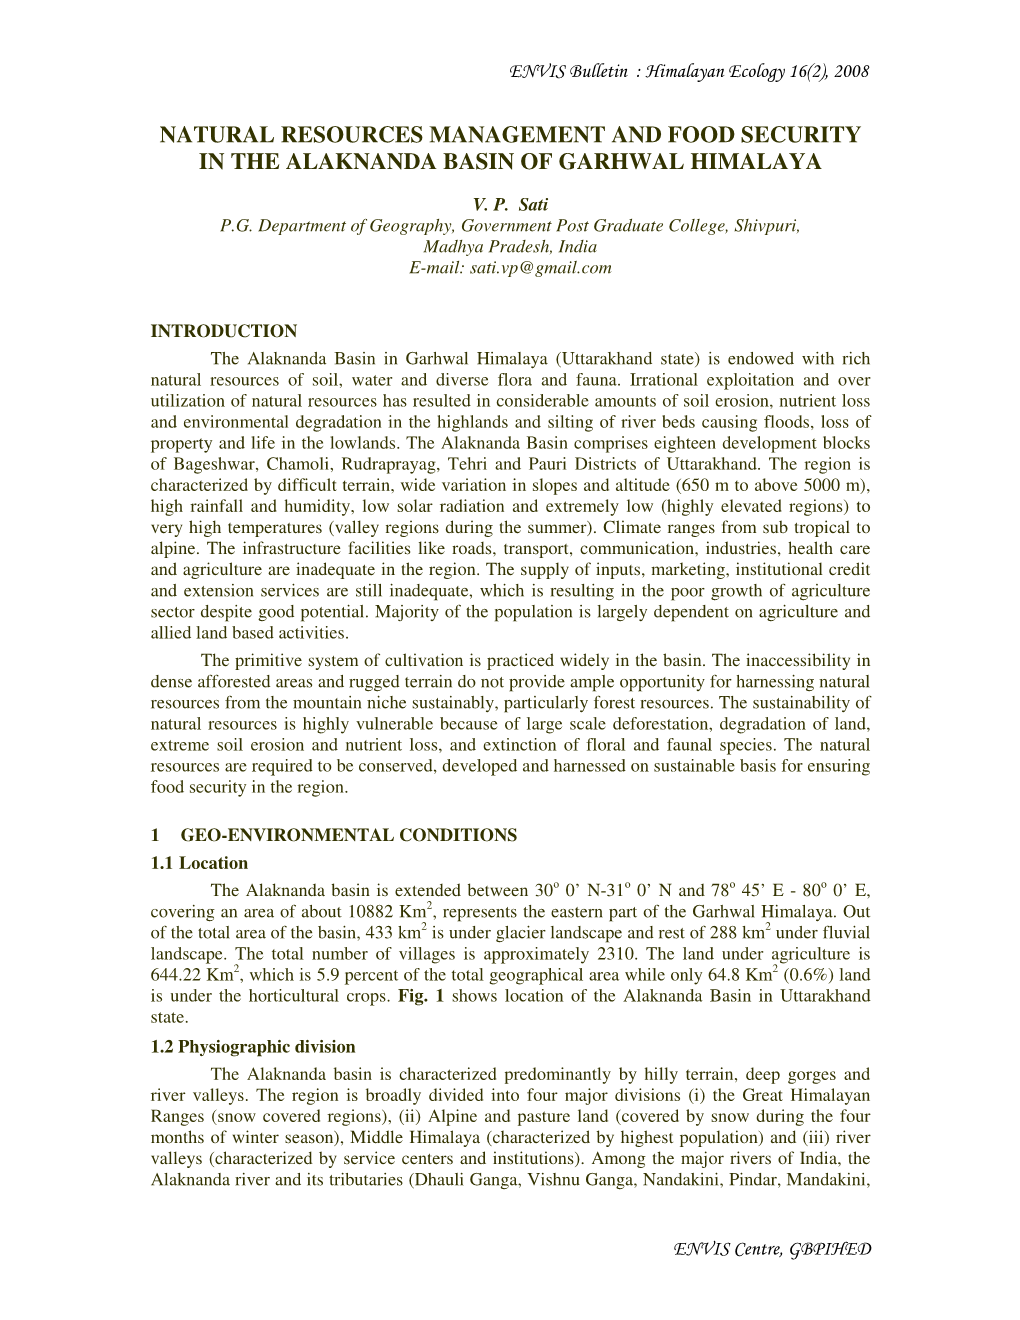 Natural Resources Management and Food Security in the Alaknanda Basin of Garhwal Himalaya